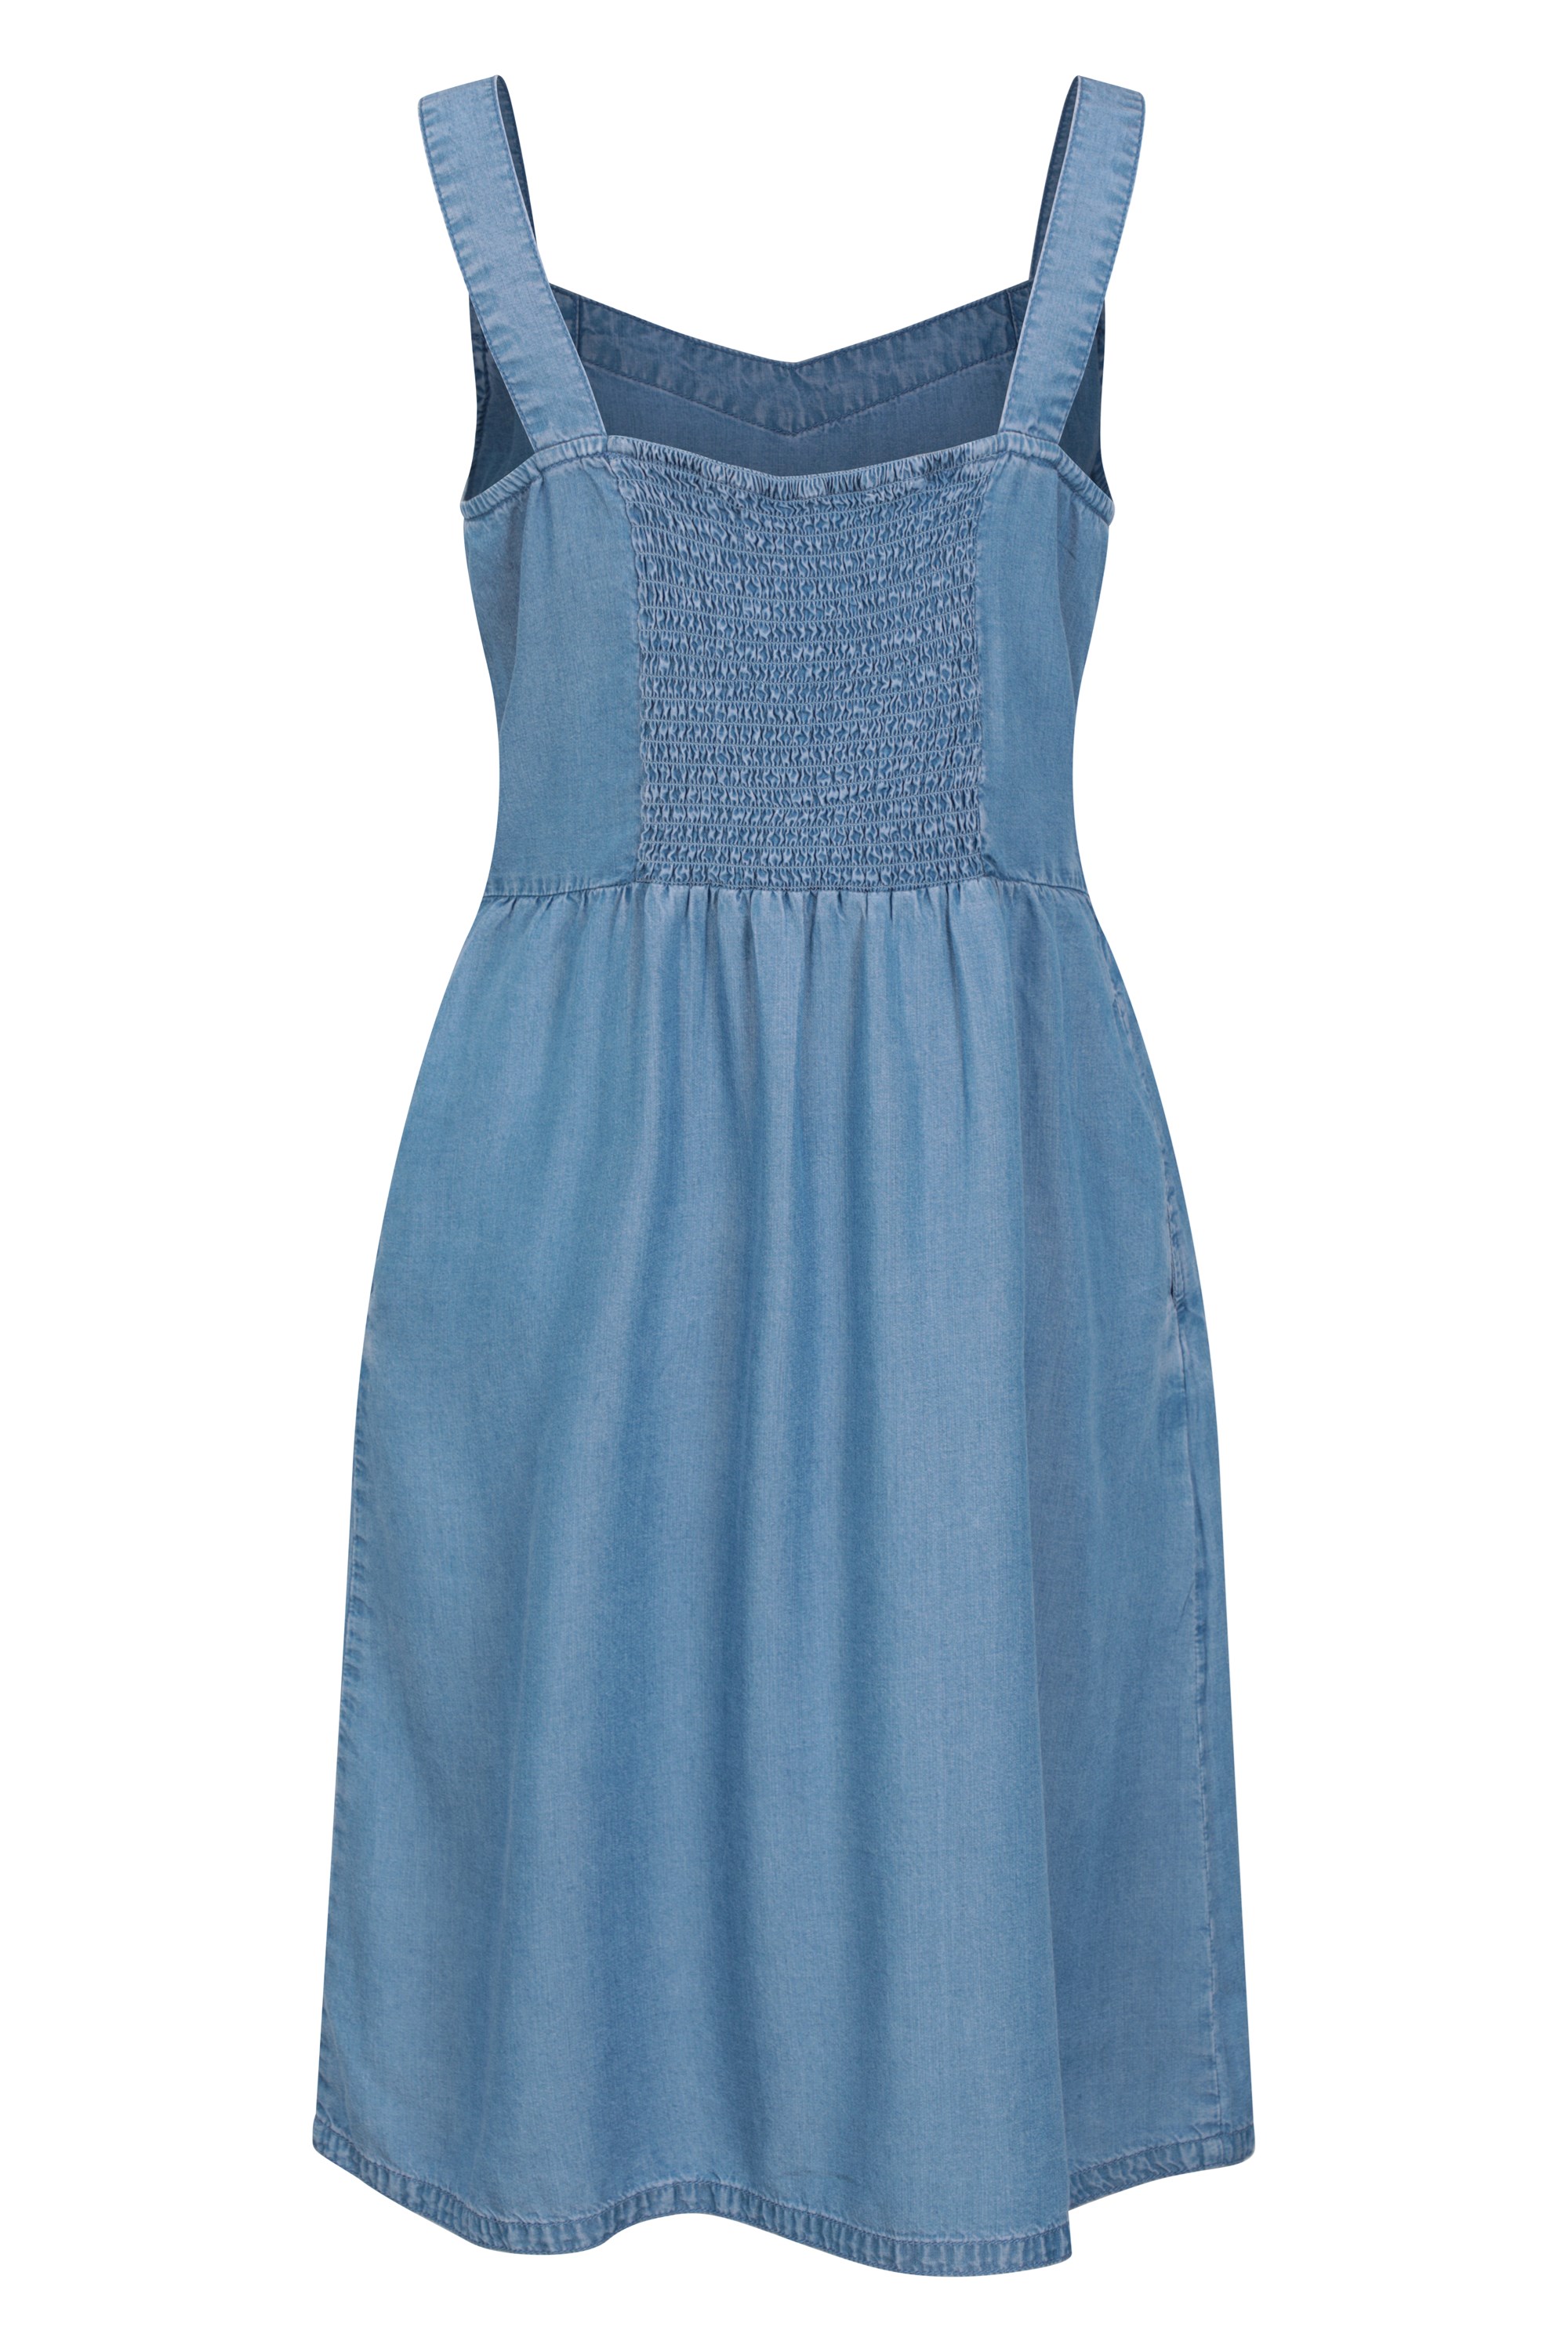 Dimpy Garments Royal Blue Women's Maxi Dungaree Dress with Top